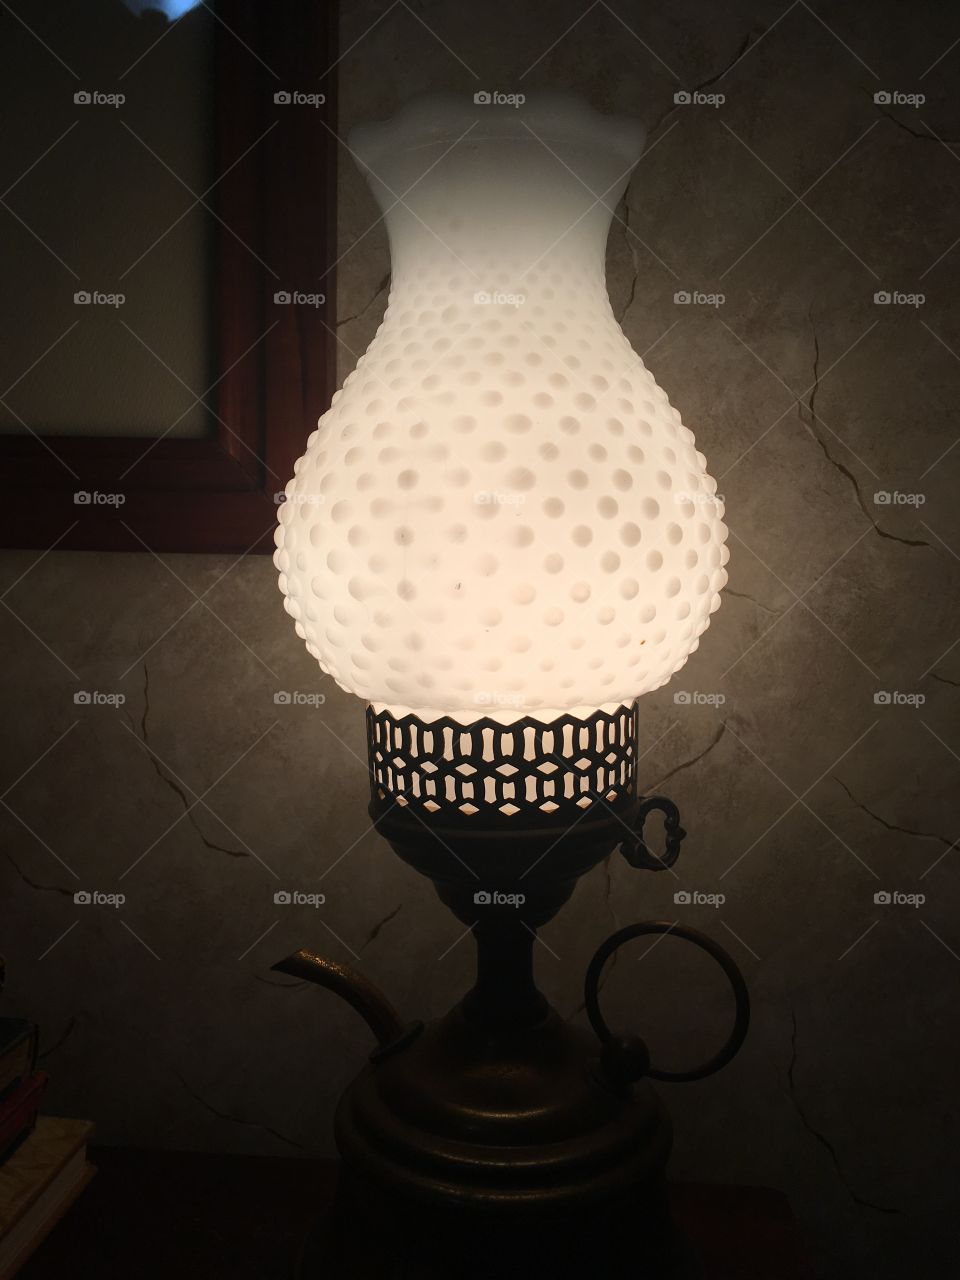 Hobnail milk glass globe on a vintage oil lamp for soft ambient lighting.